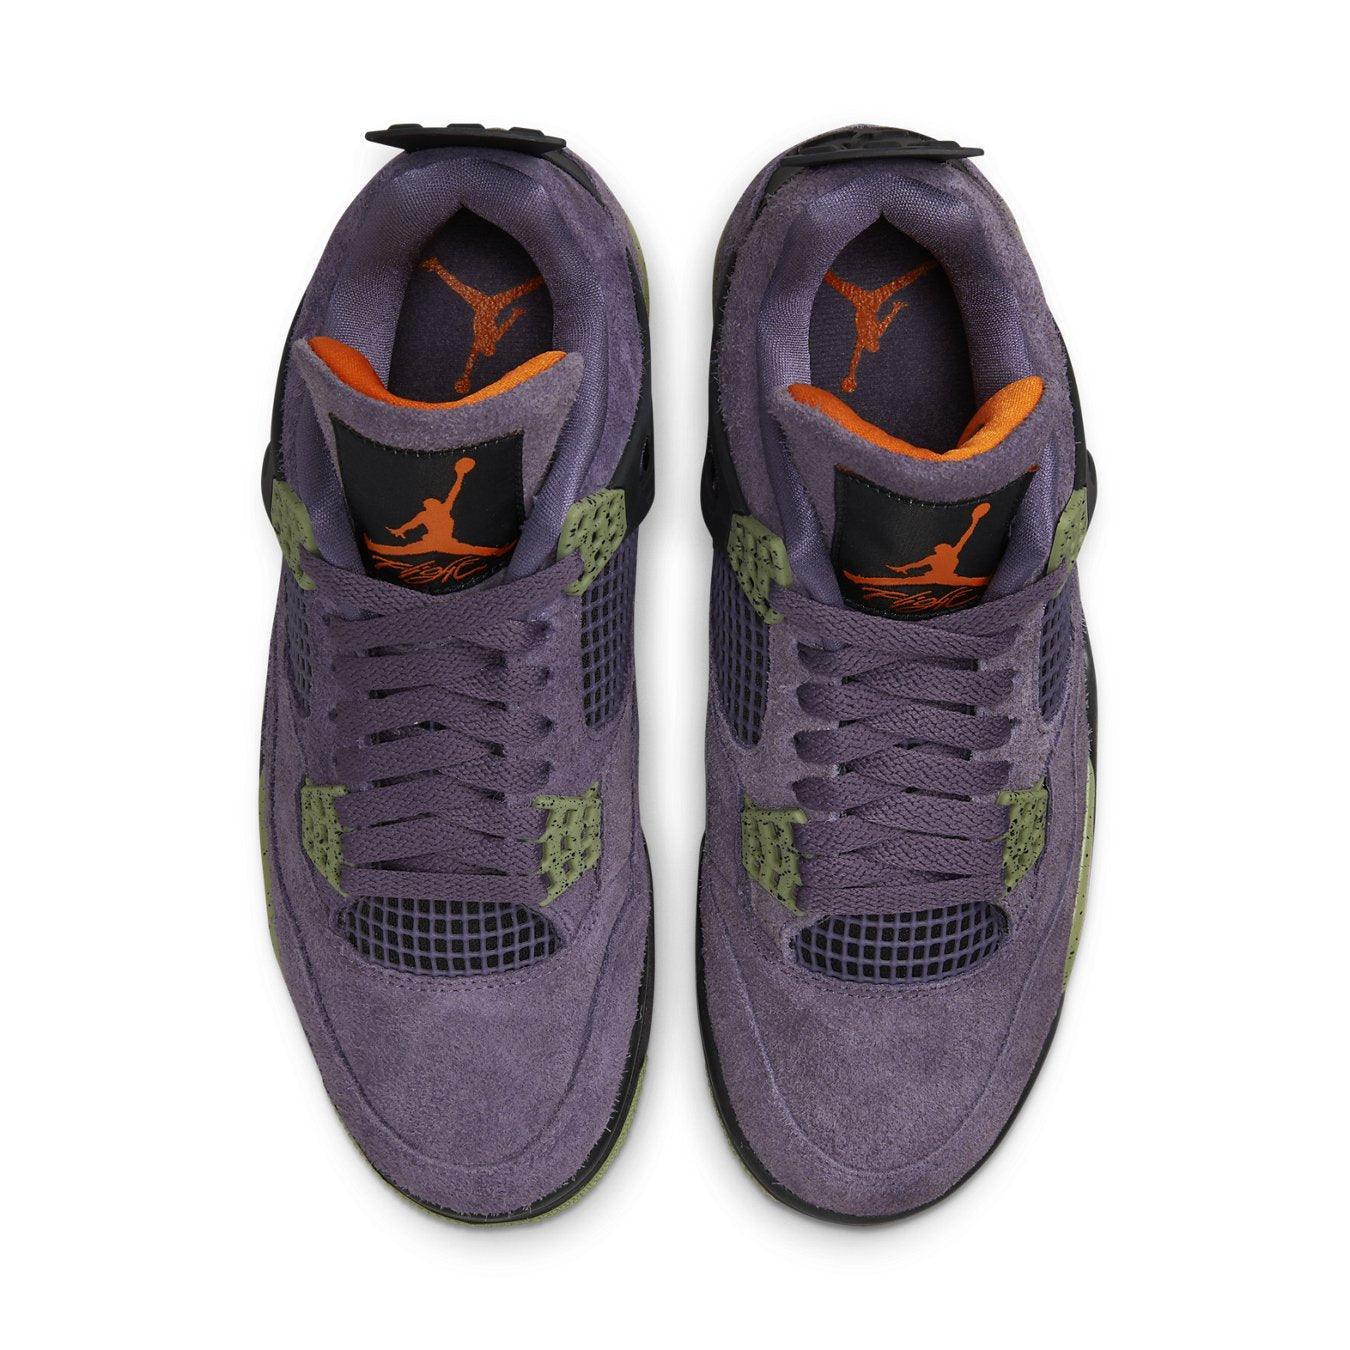 Air Jordan 4 Canyon Purple - LNS lanovashoes 